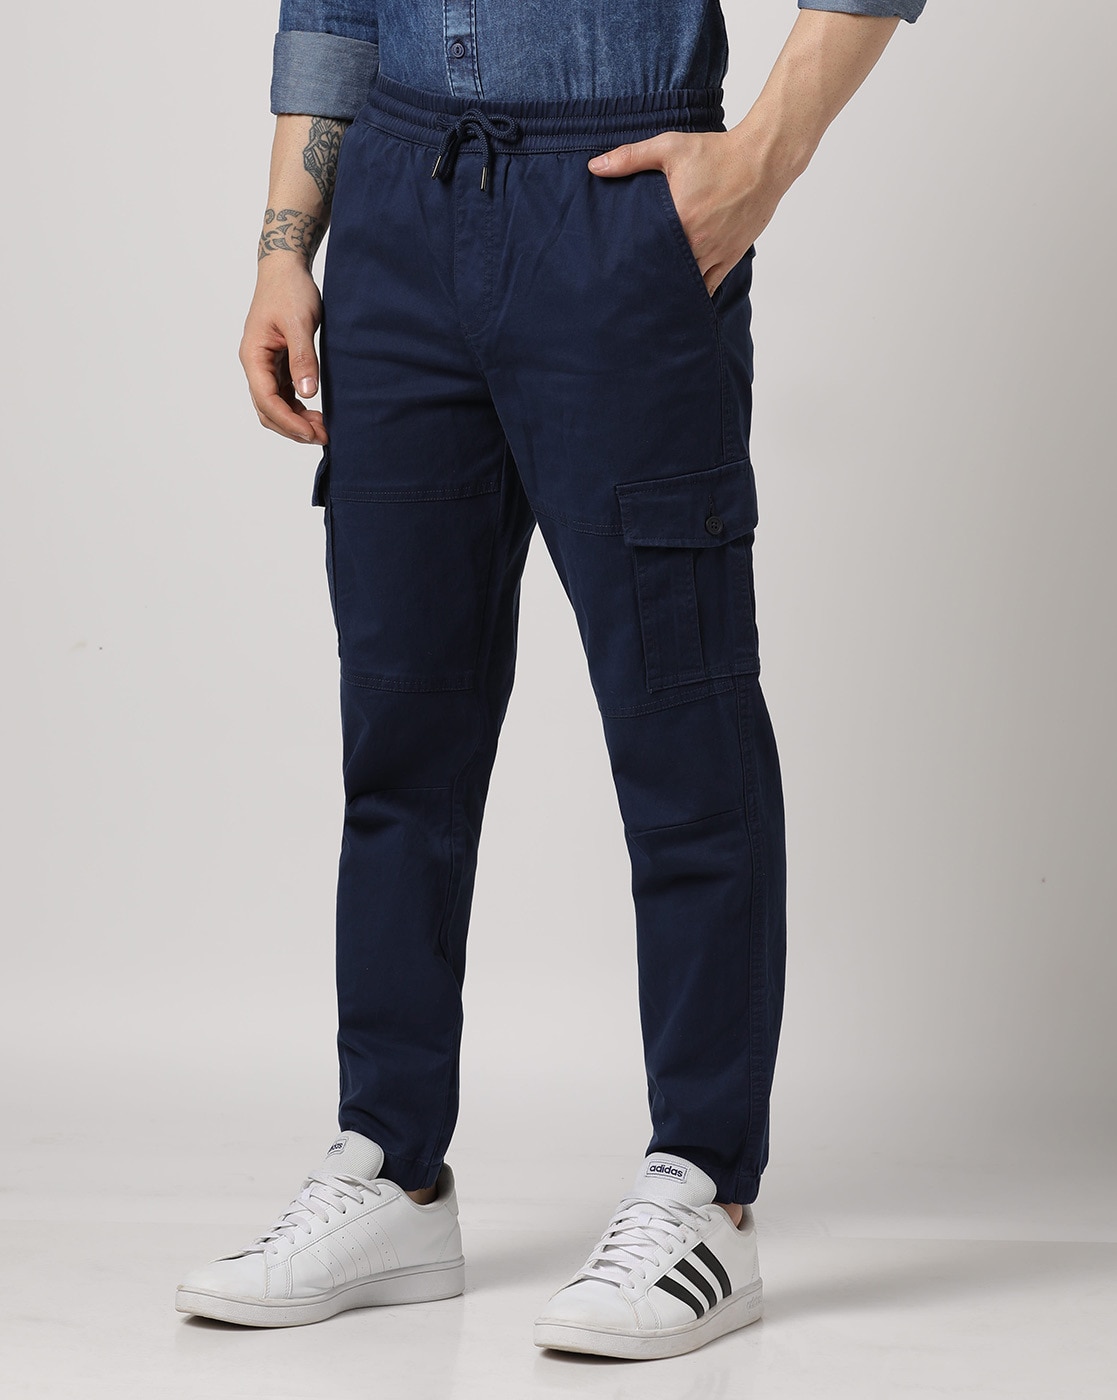 Men's Plus Size Cargo Pants with Belt Navy Blue Bolf CT8901 NAVY BLUE